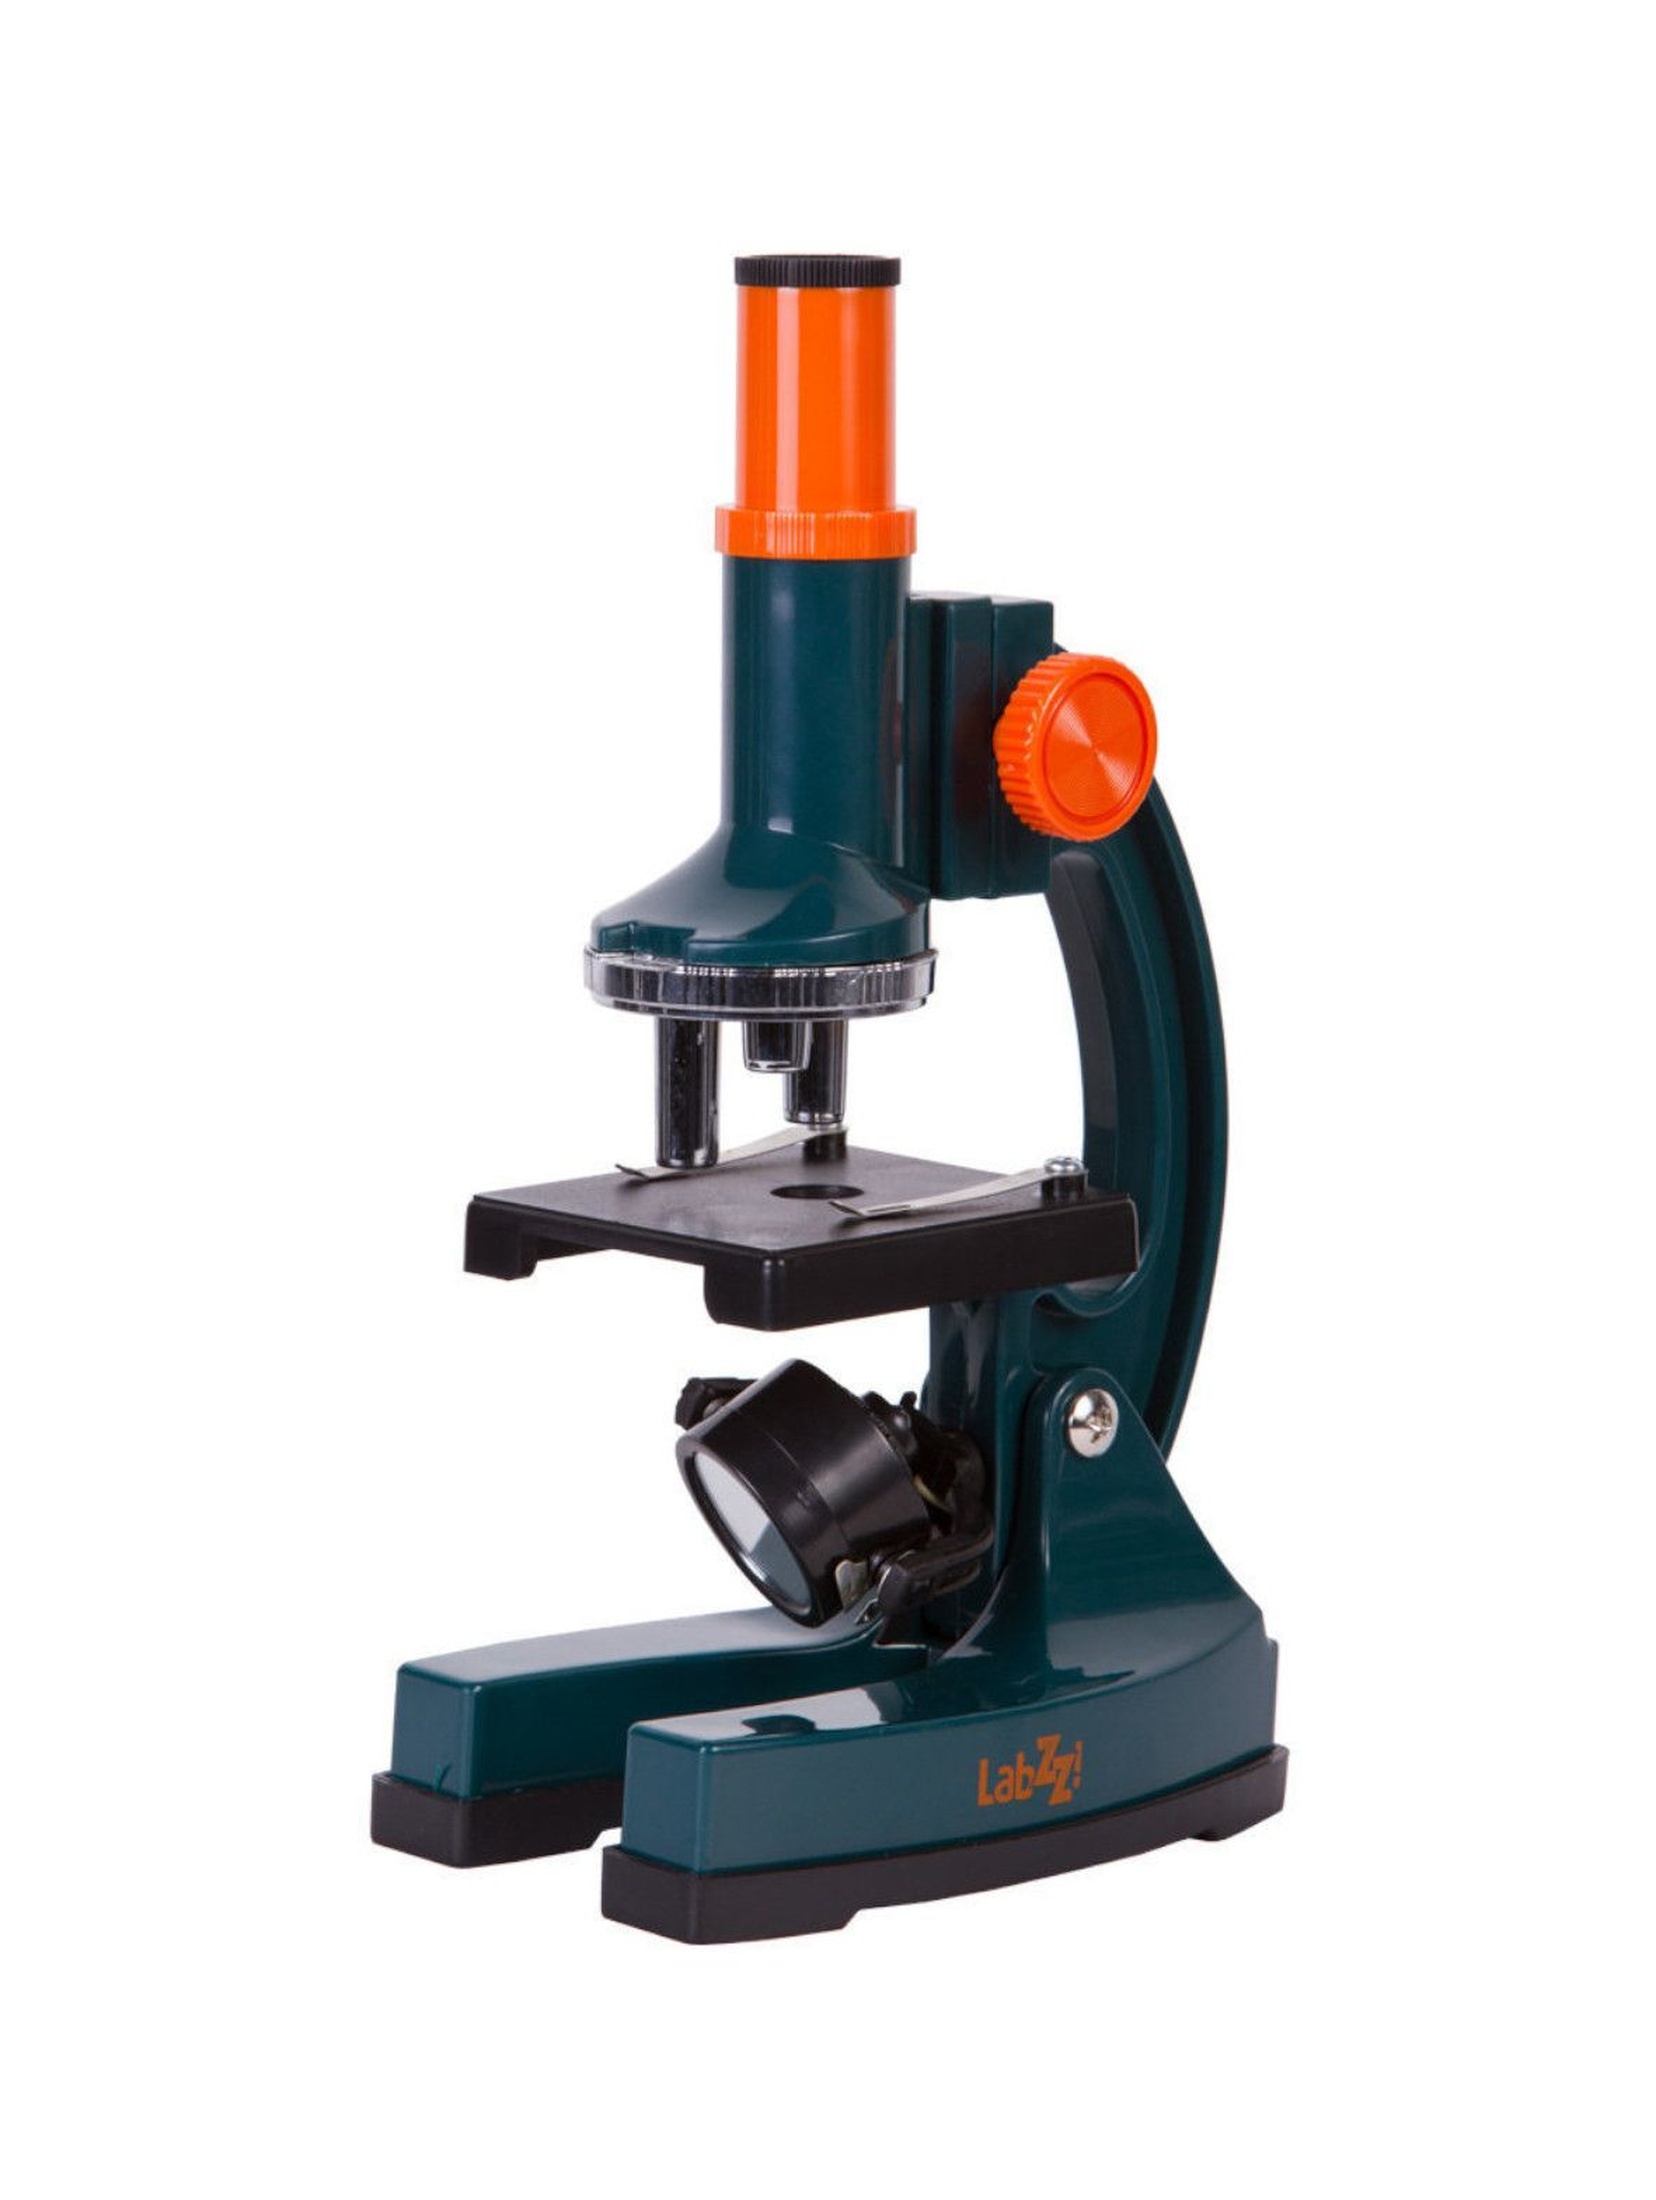 Mikroskop LabZZ M2